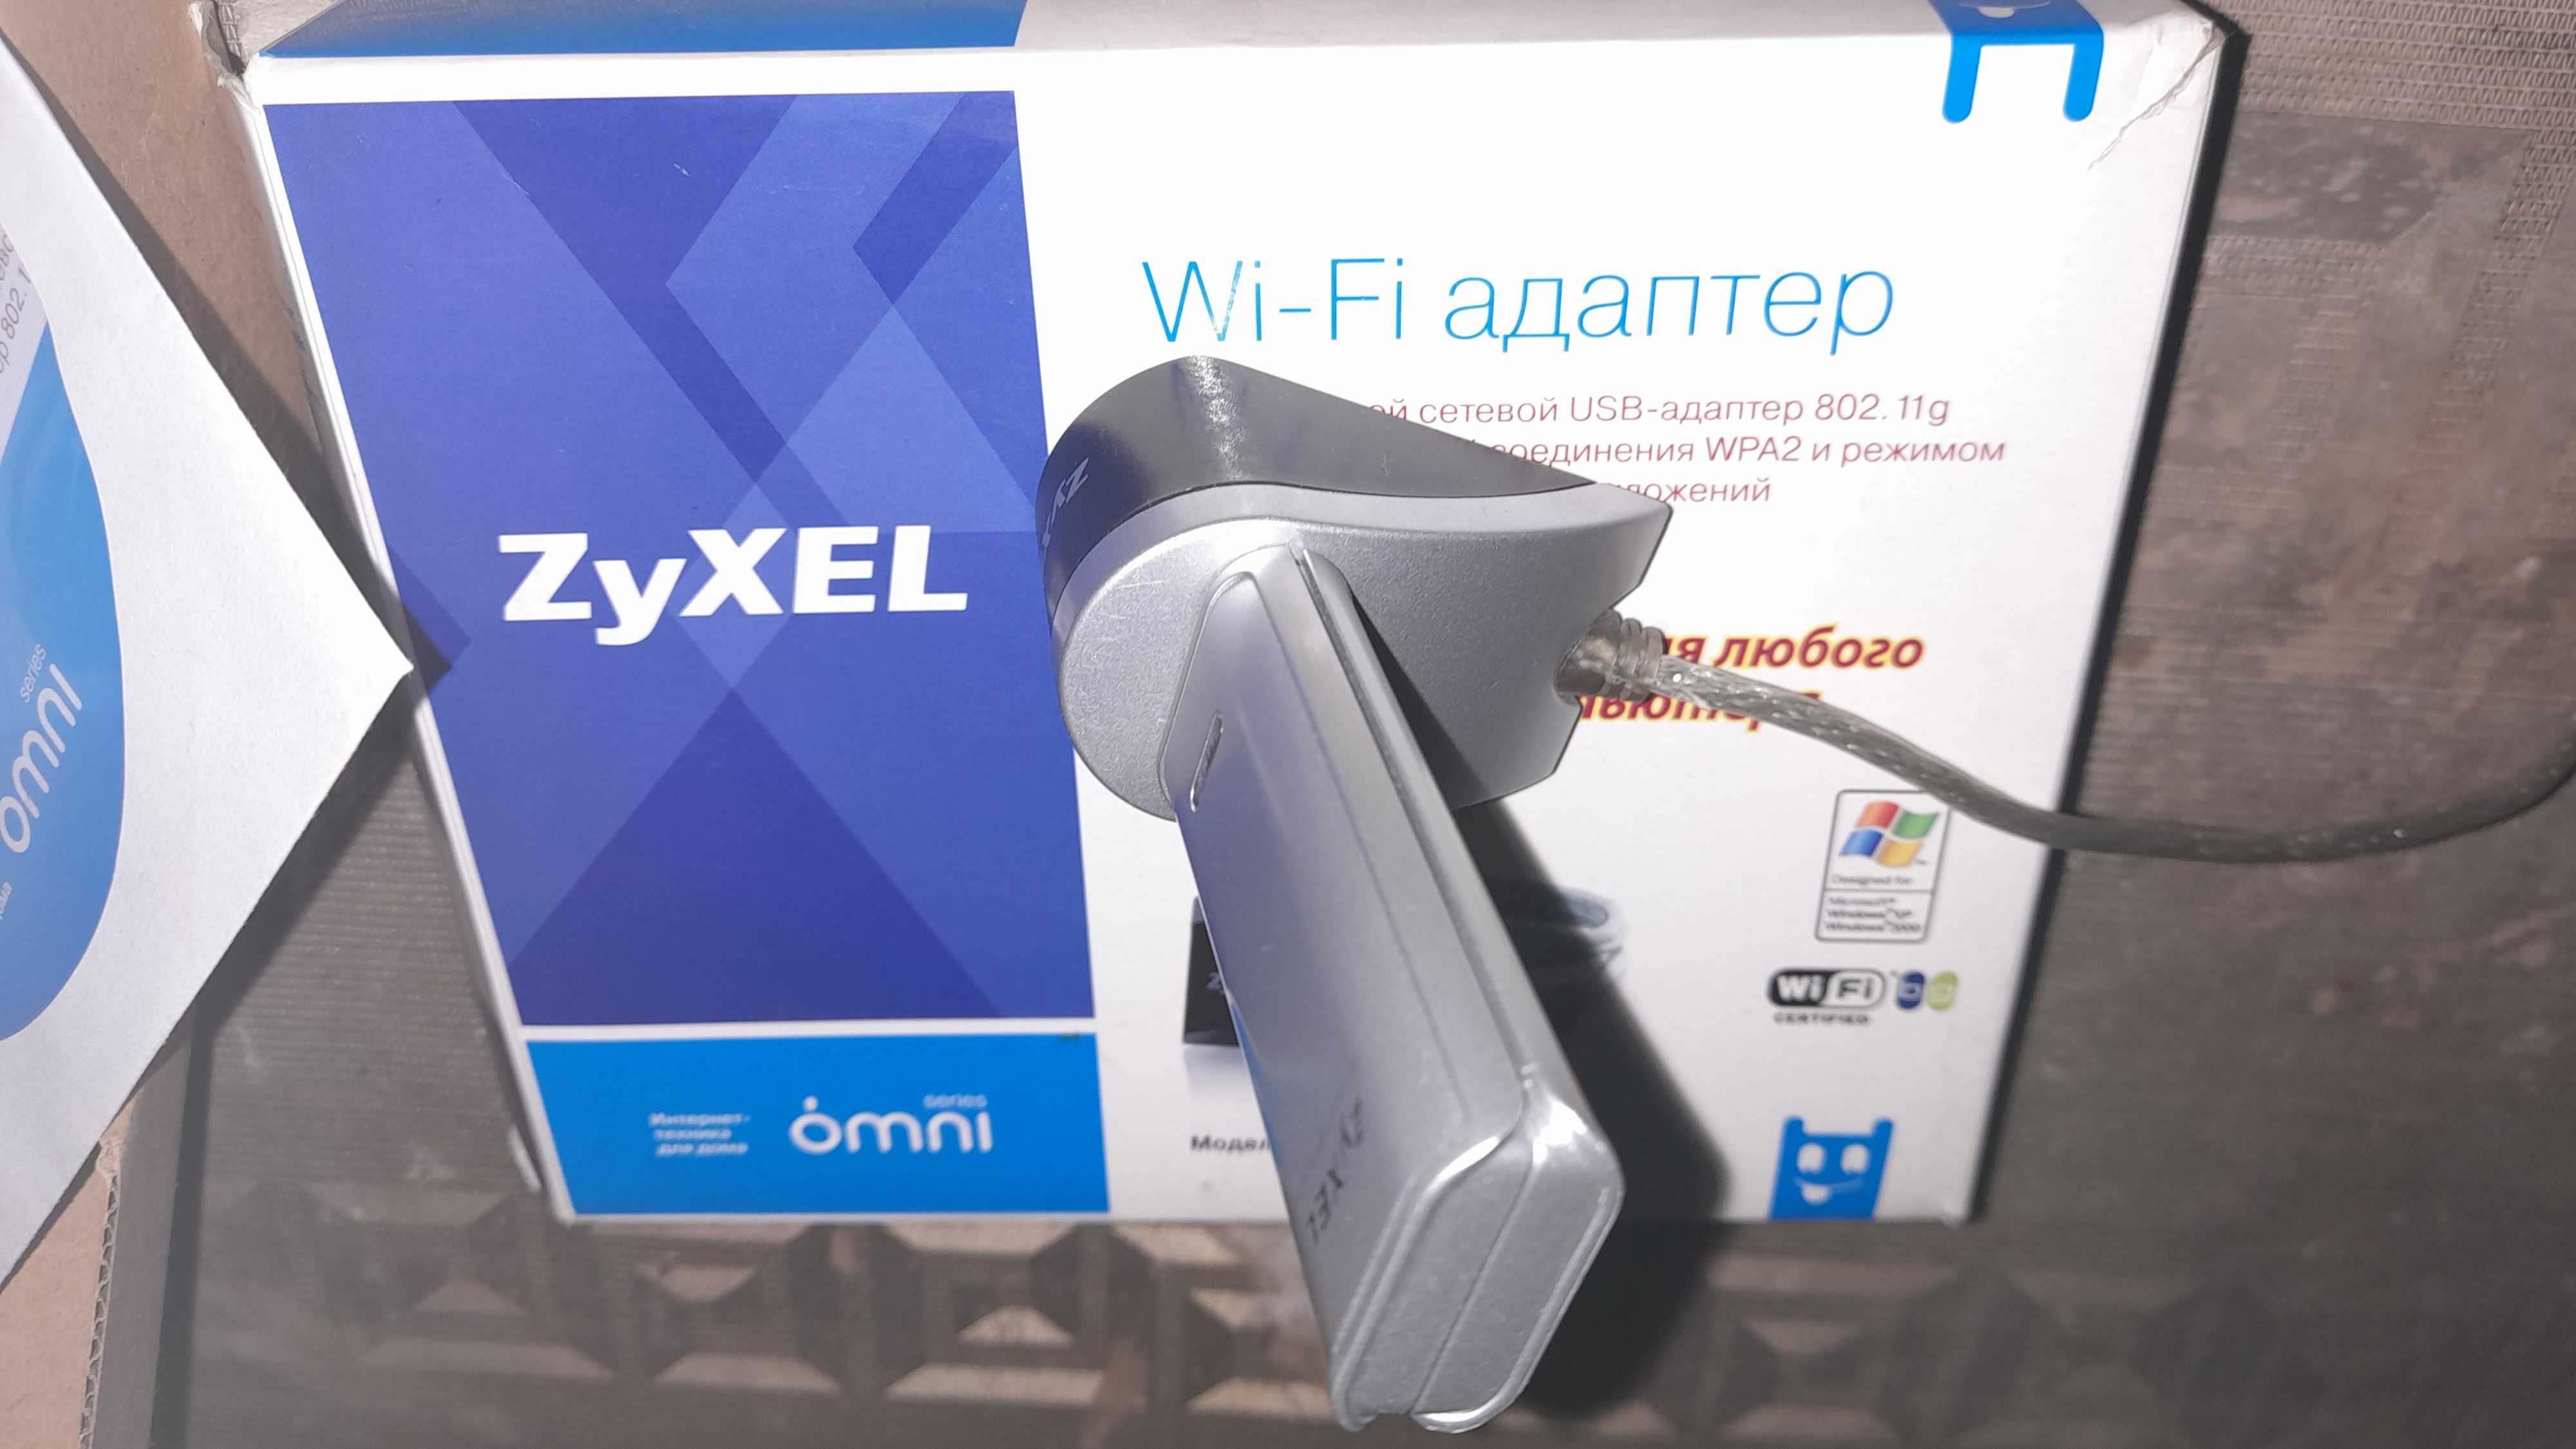 Wifi,вайфай адаптер ZYXEL-G220 EE